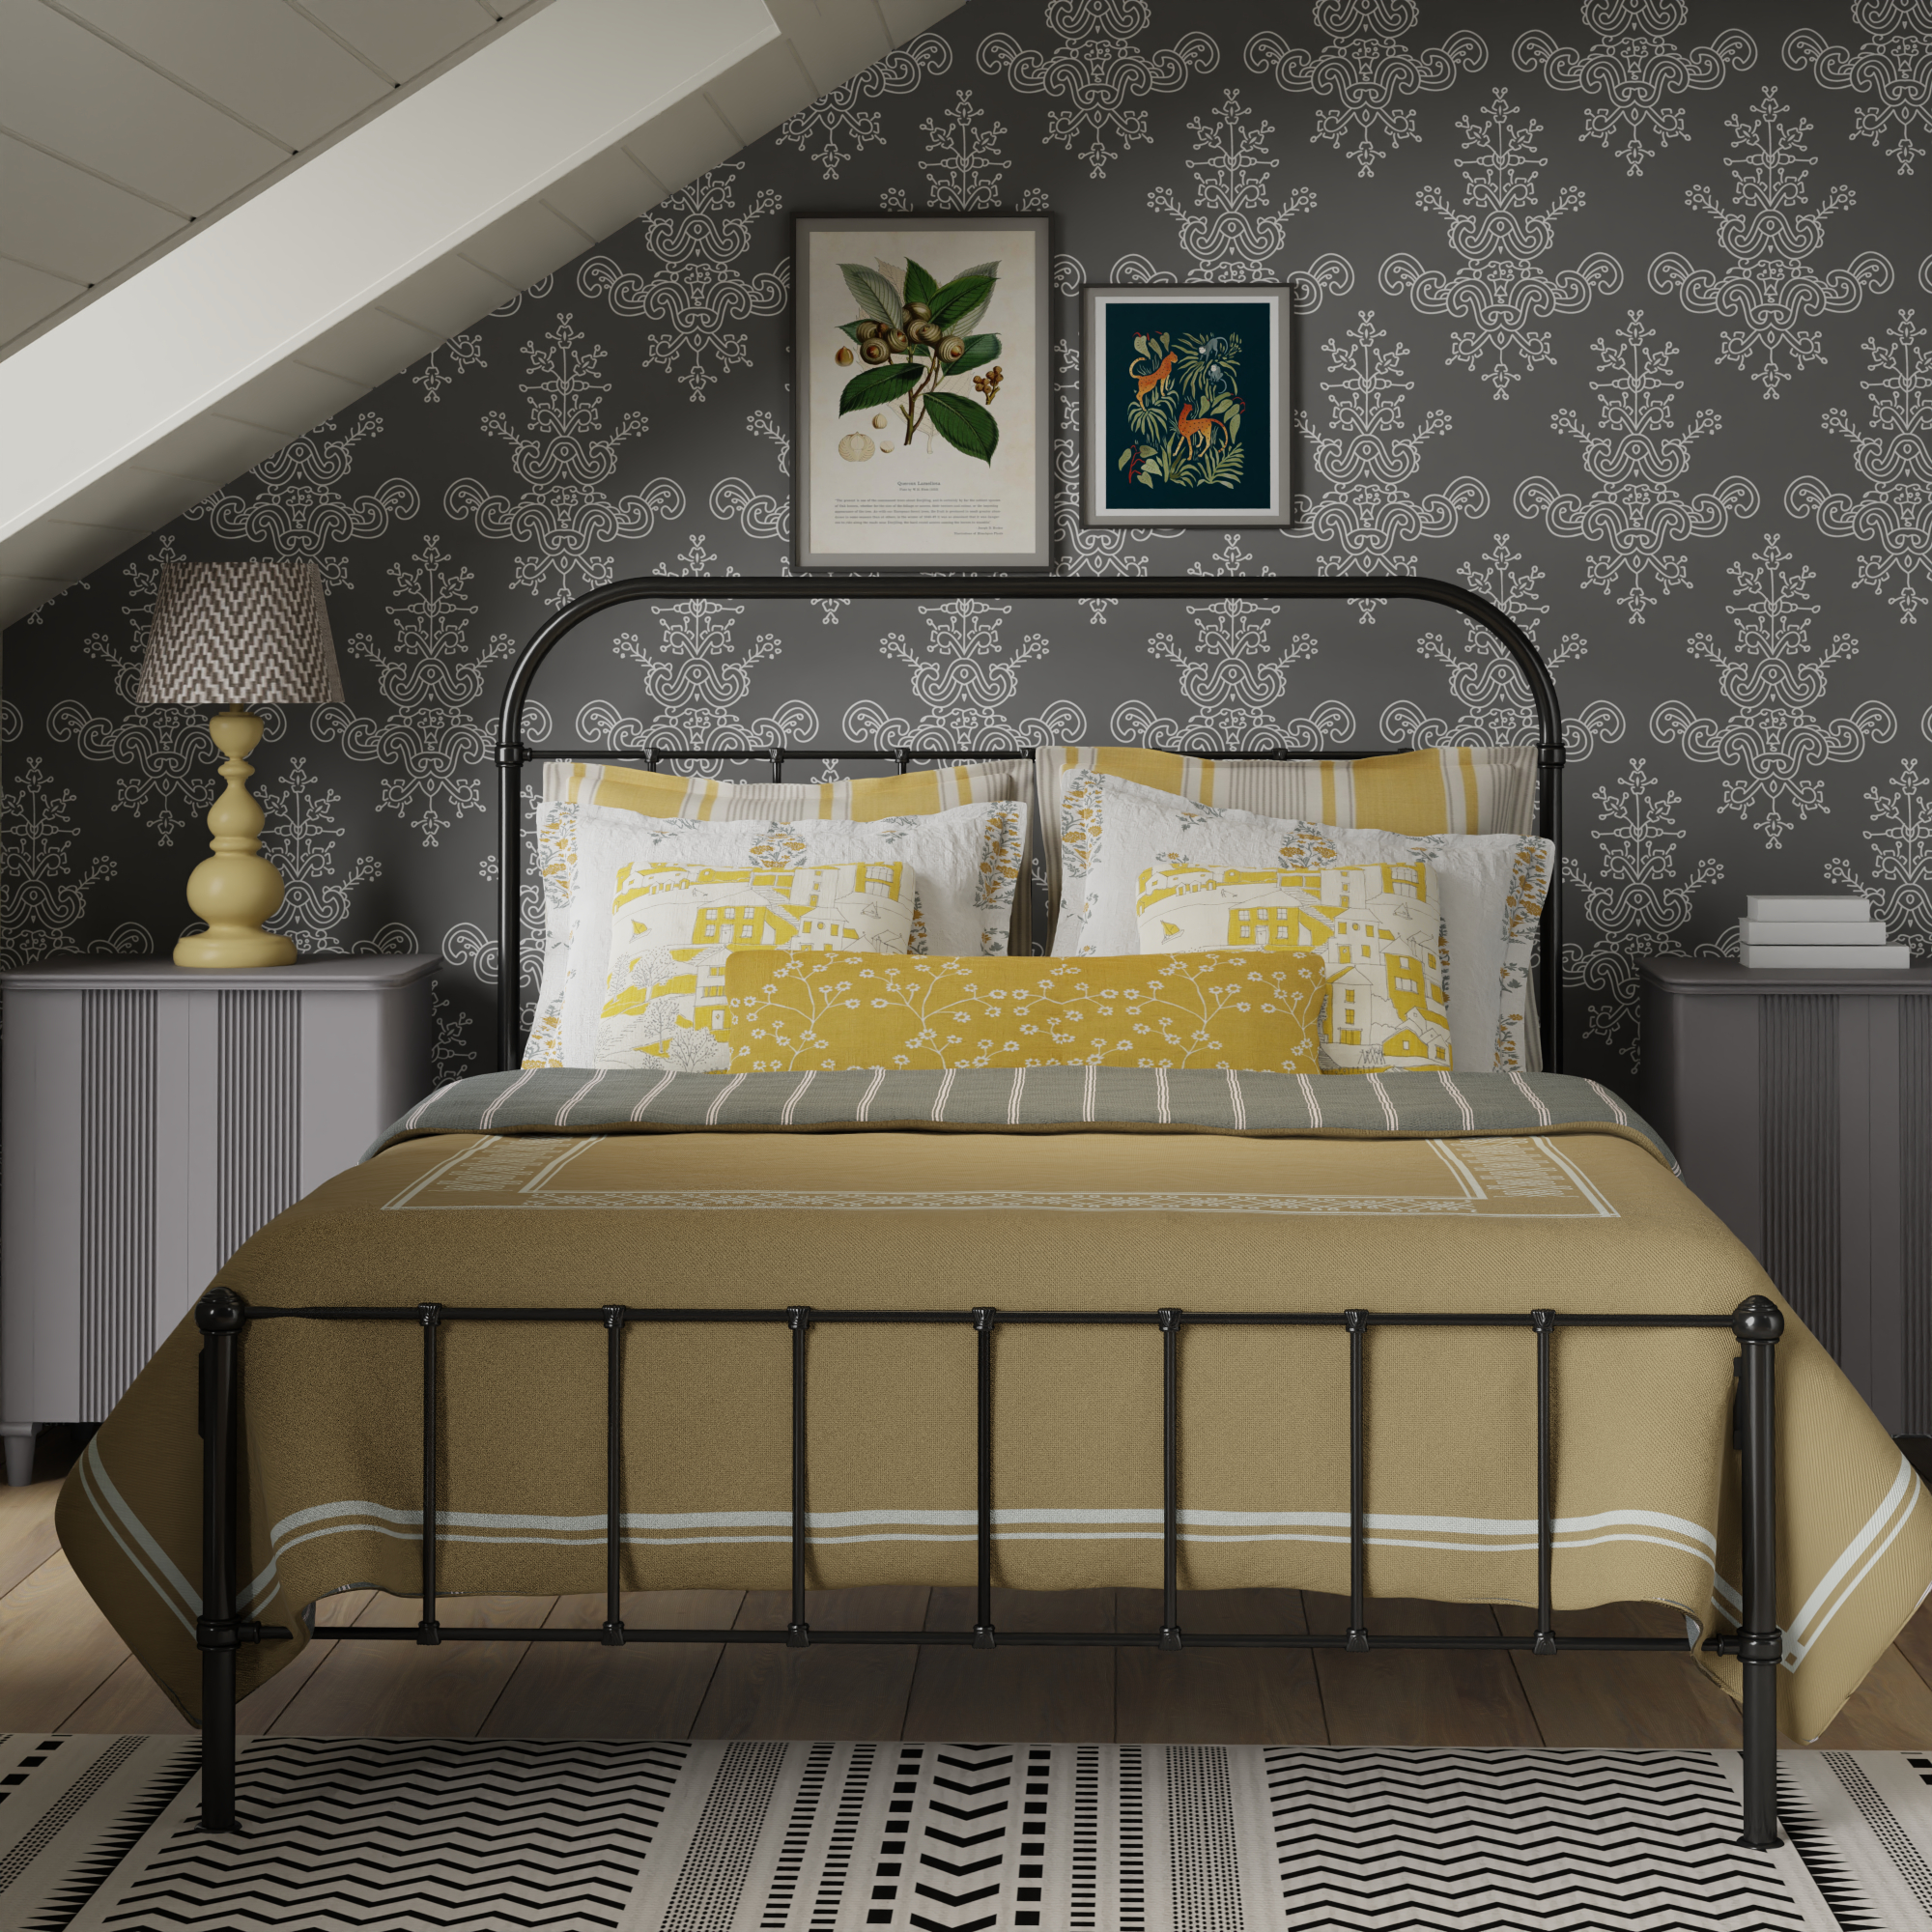 Solomon iron bed - Image ochre grey bedroom